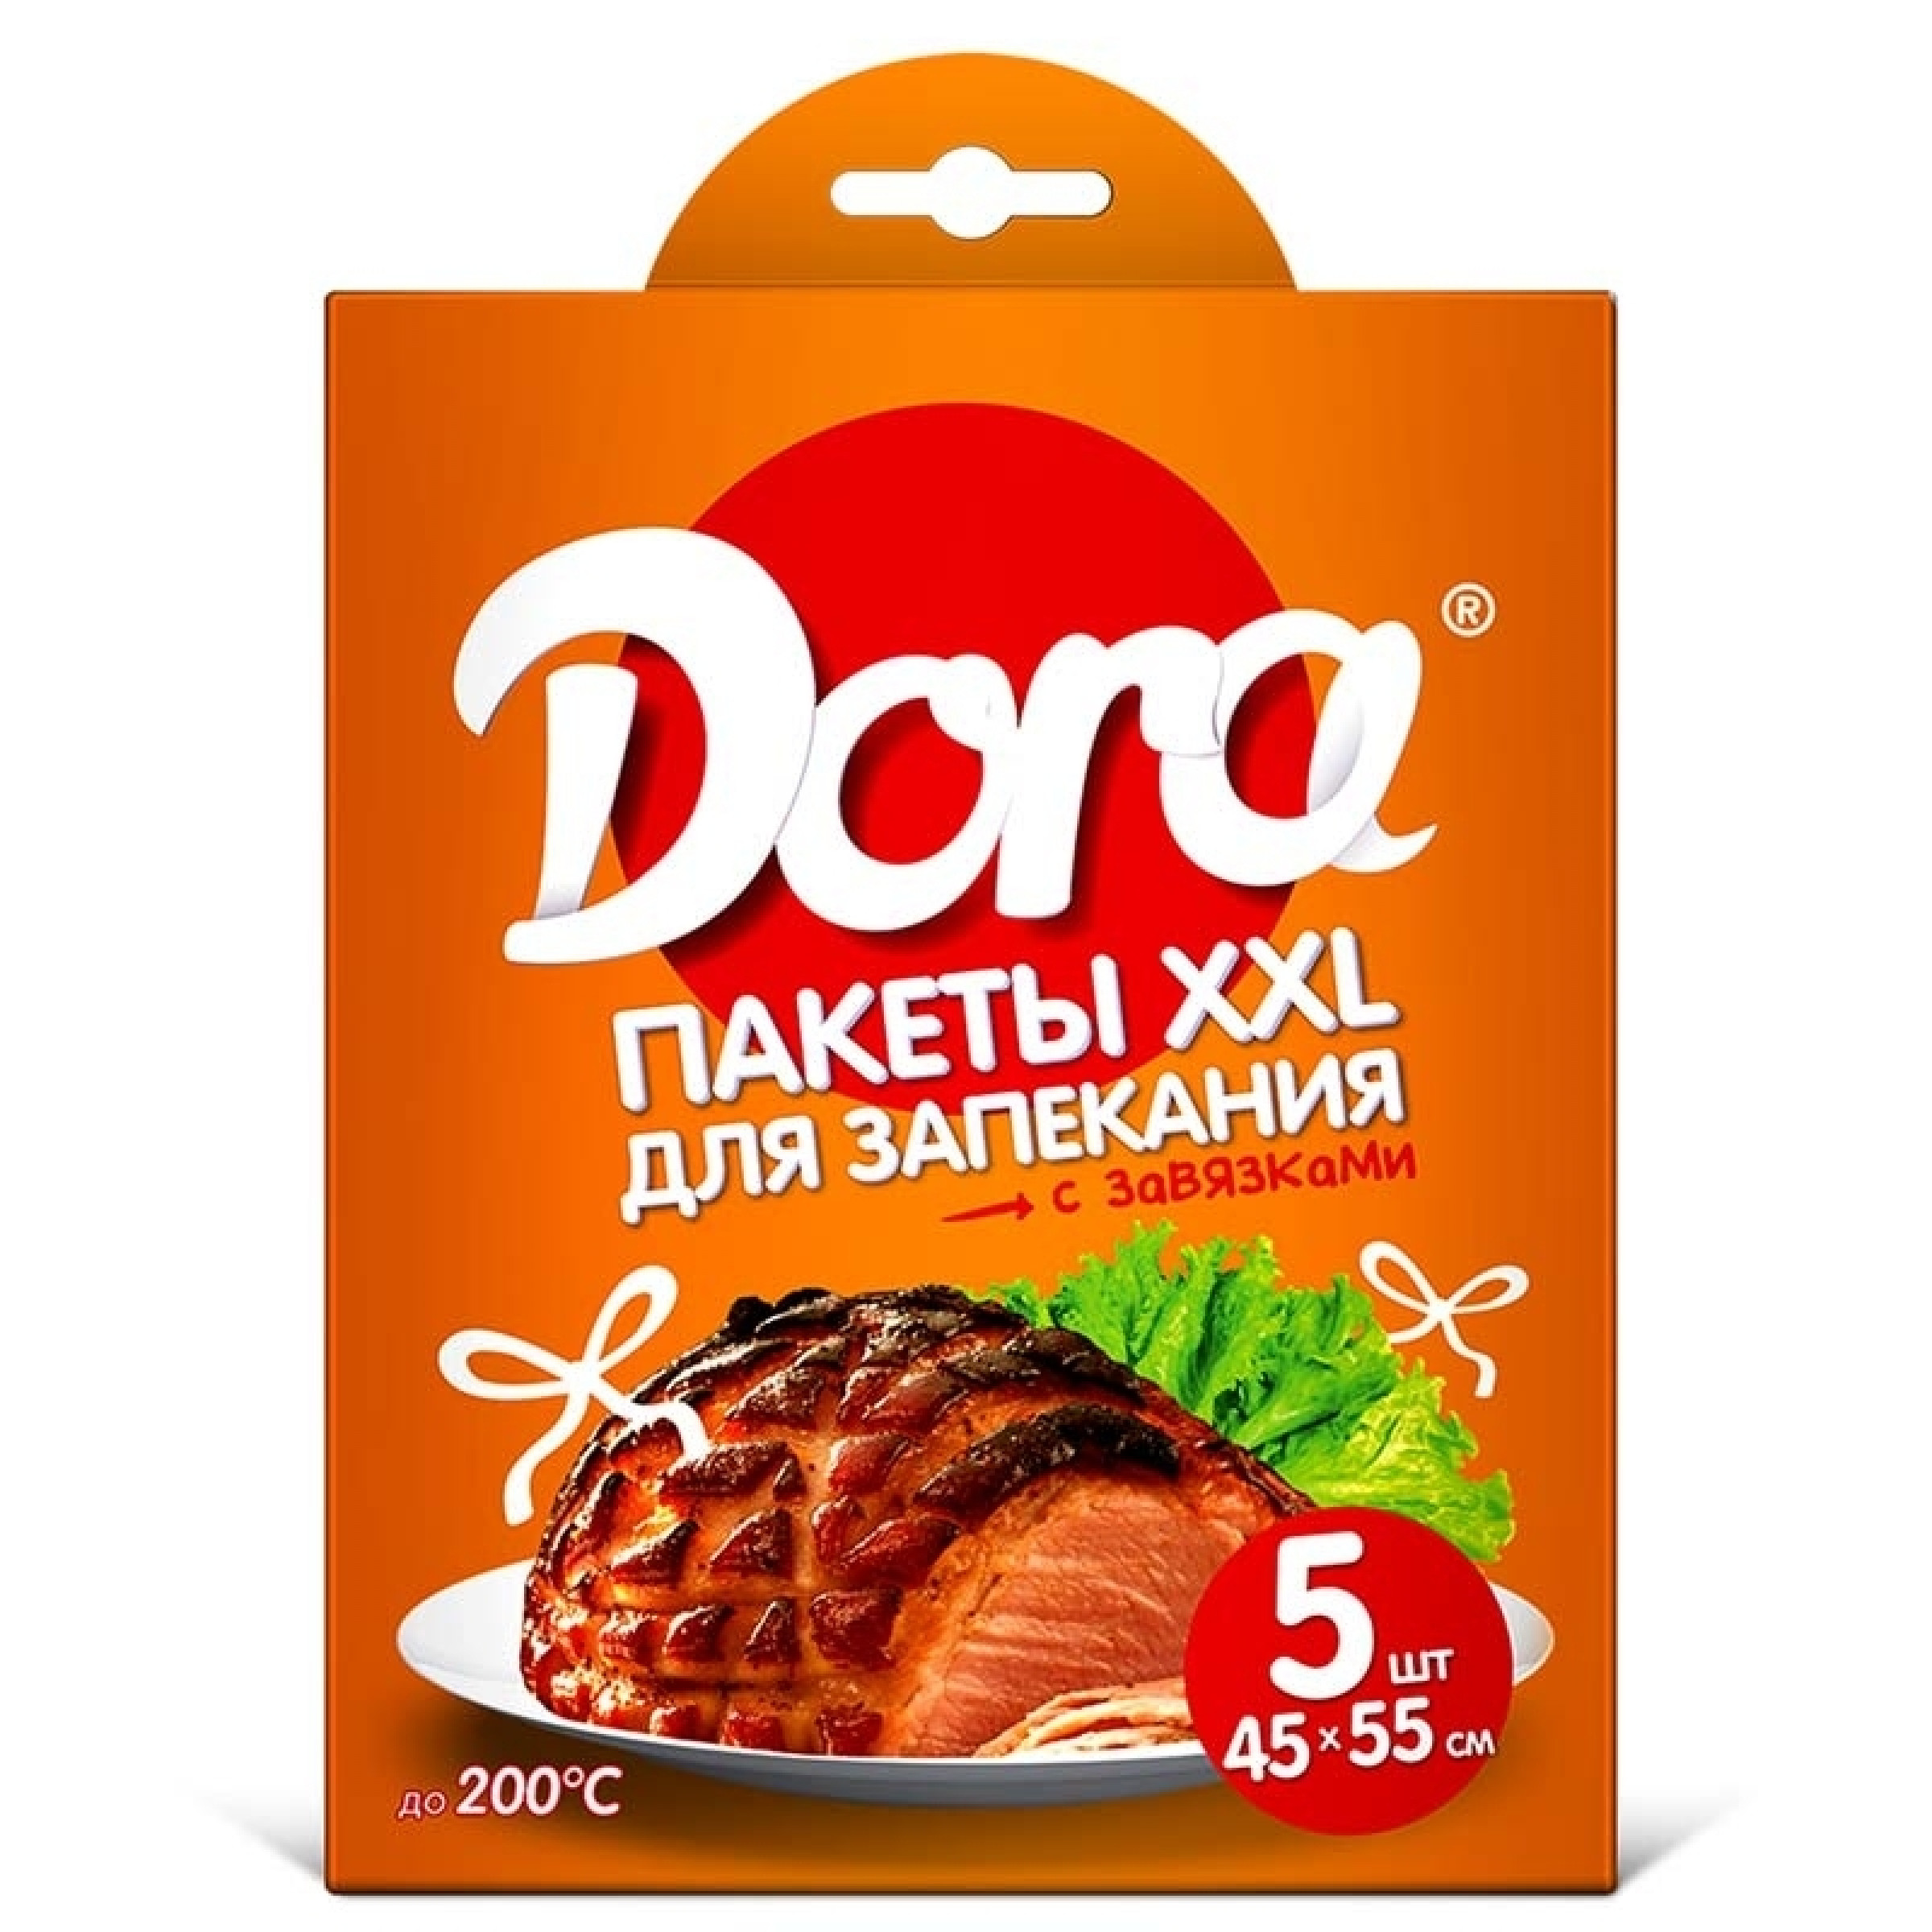 Пакет для запекания Dora XXL с завязками 45х55см, 5 шт